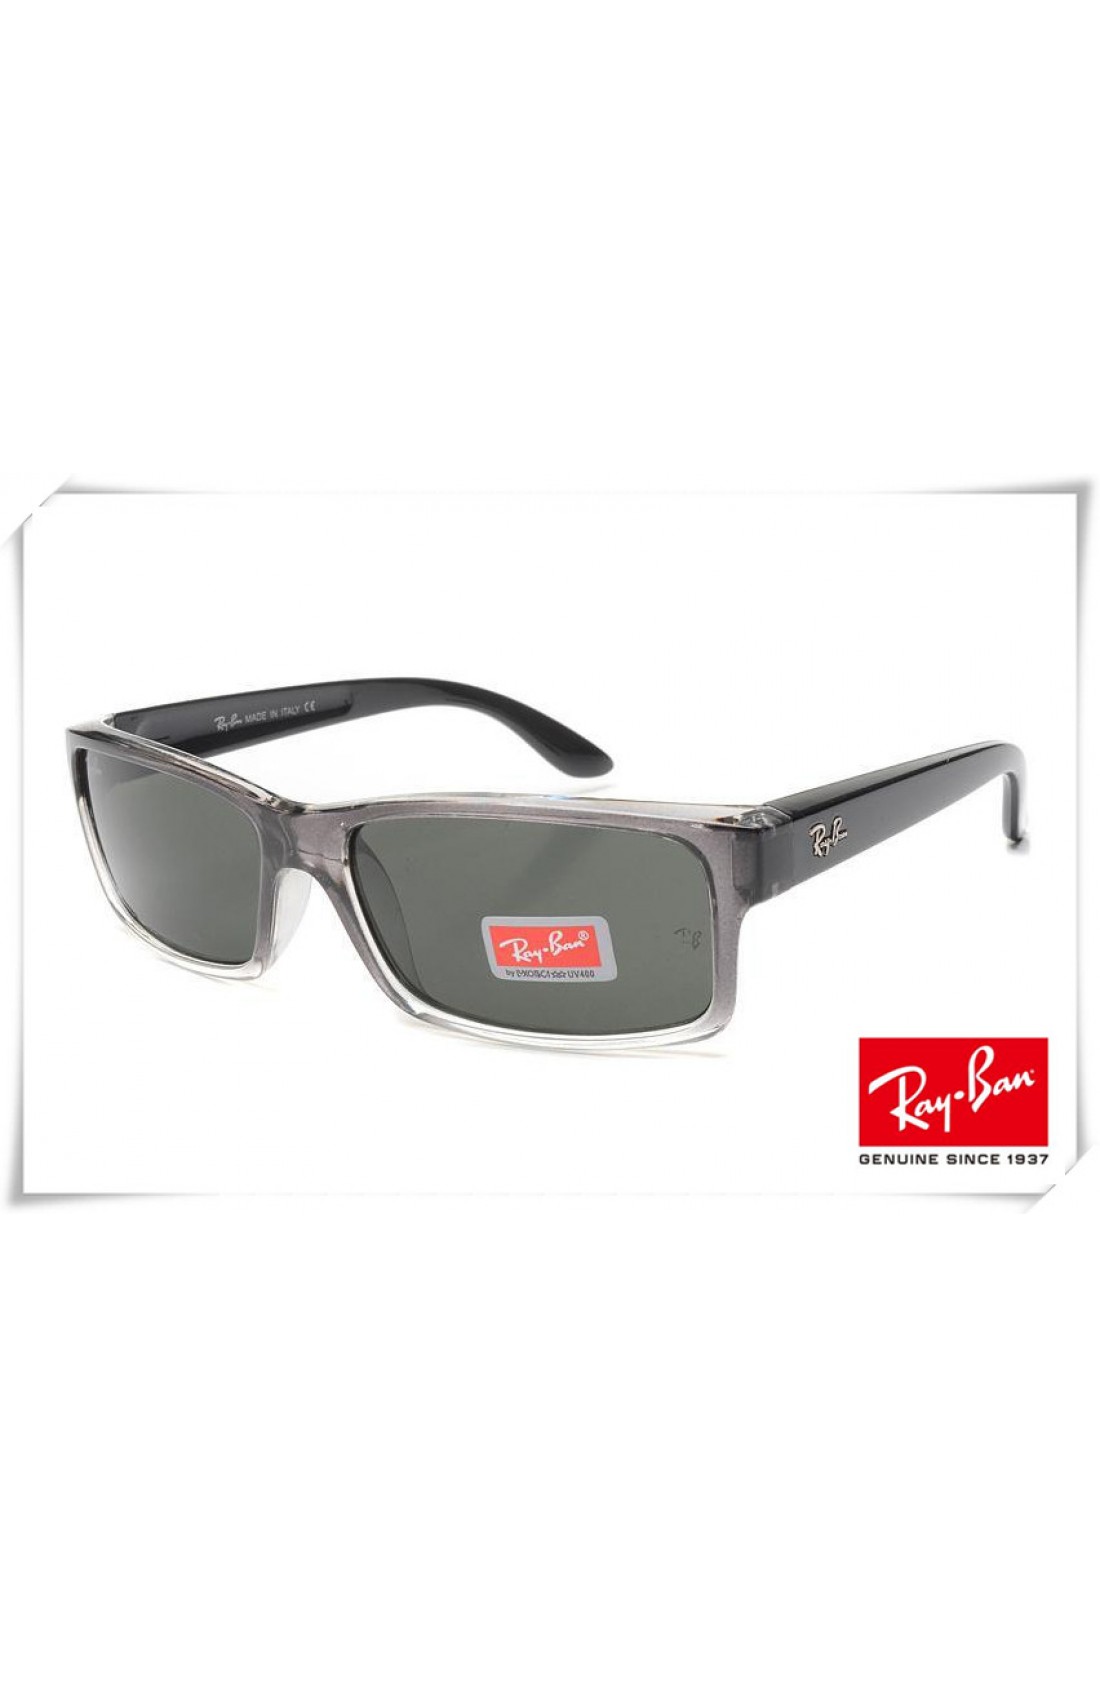 Wholesale Ray Ban RB4151 Sunglasses 